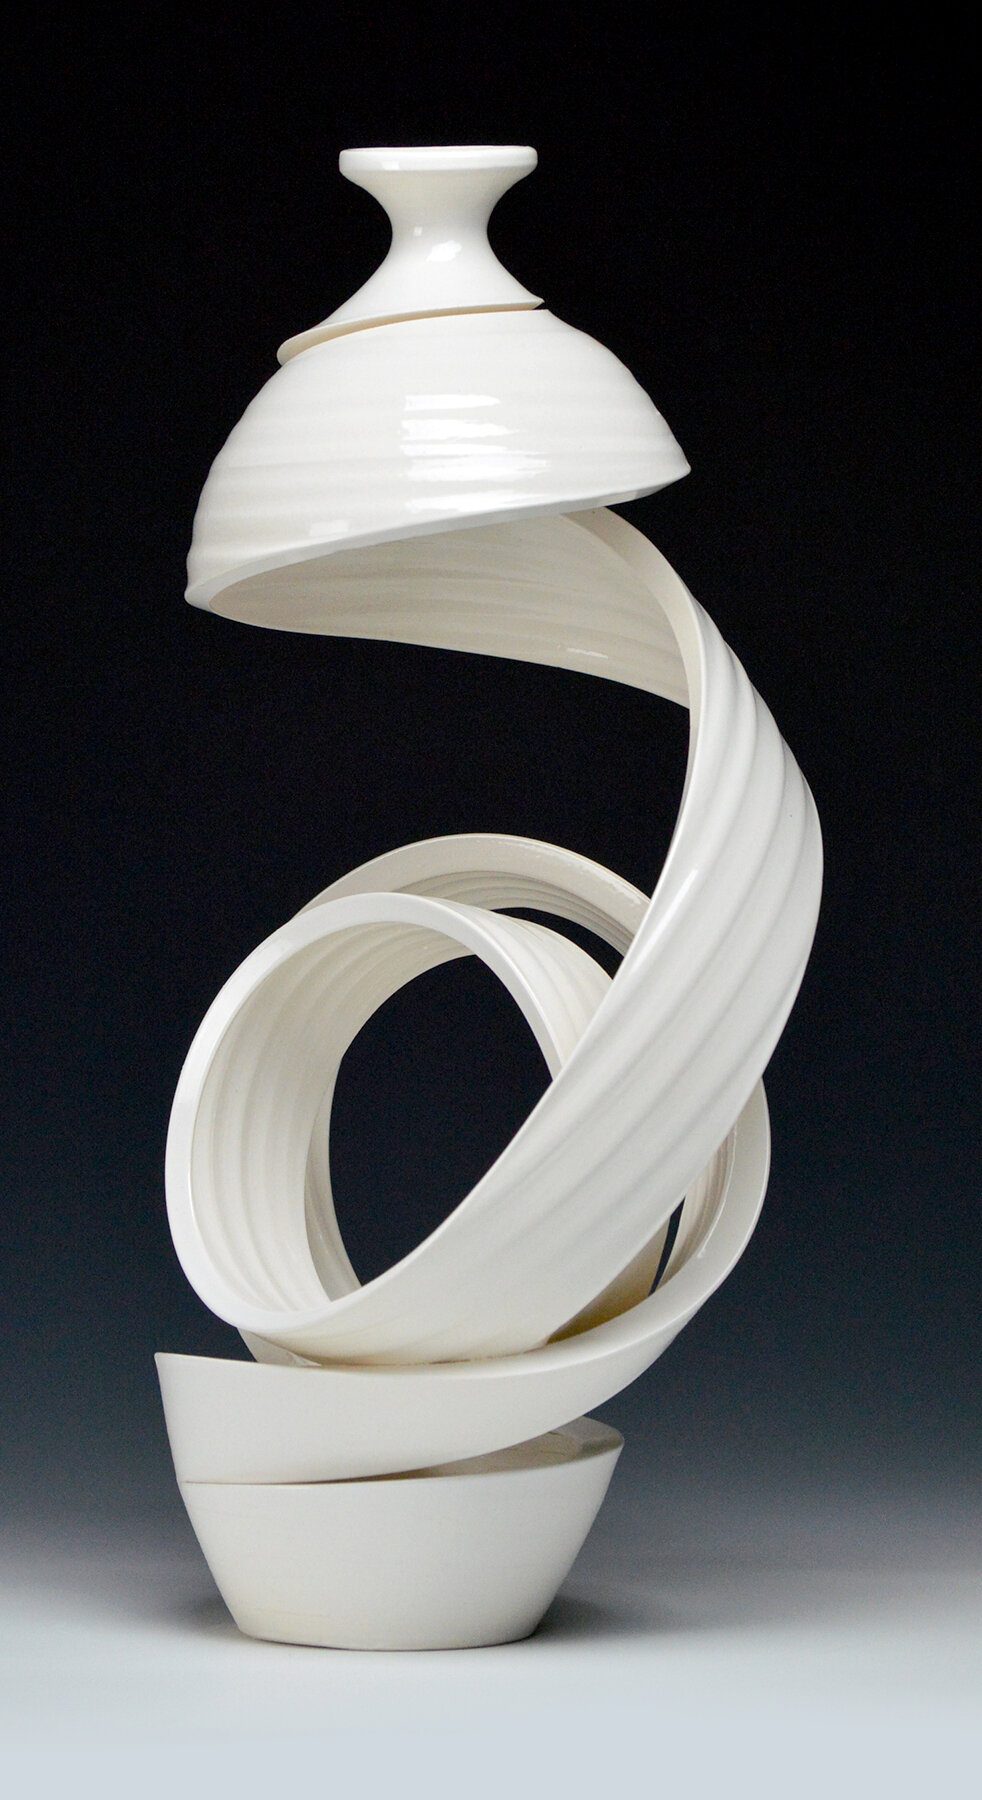 Spatial Spiral; Loop, 15.5 x 7.5 x 6.25 inches / 39.3 x 19 x 15.9 cm, ceramic, glaze, 2019